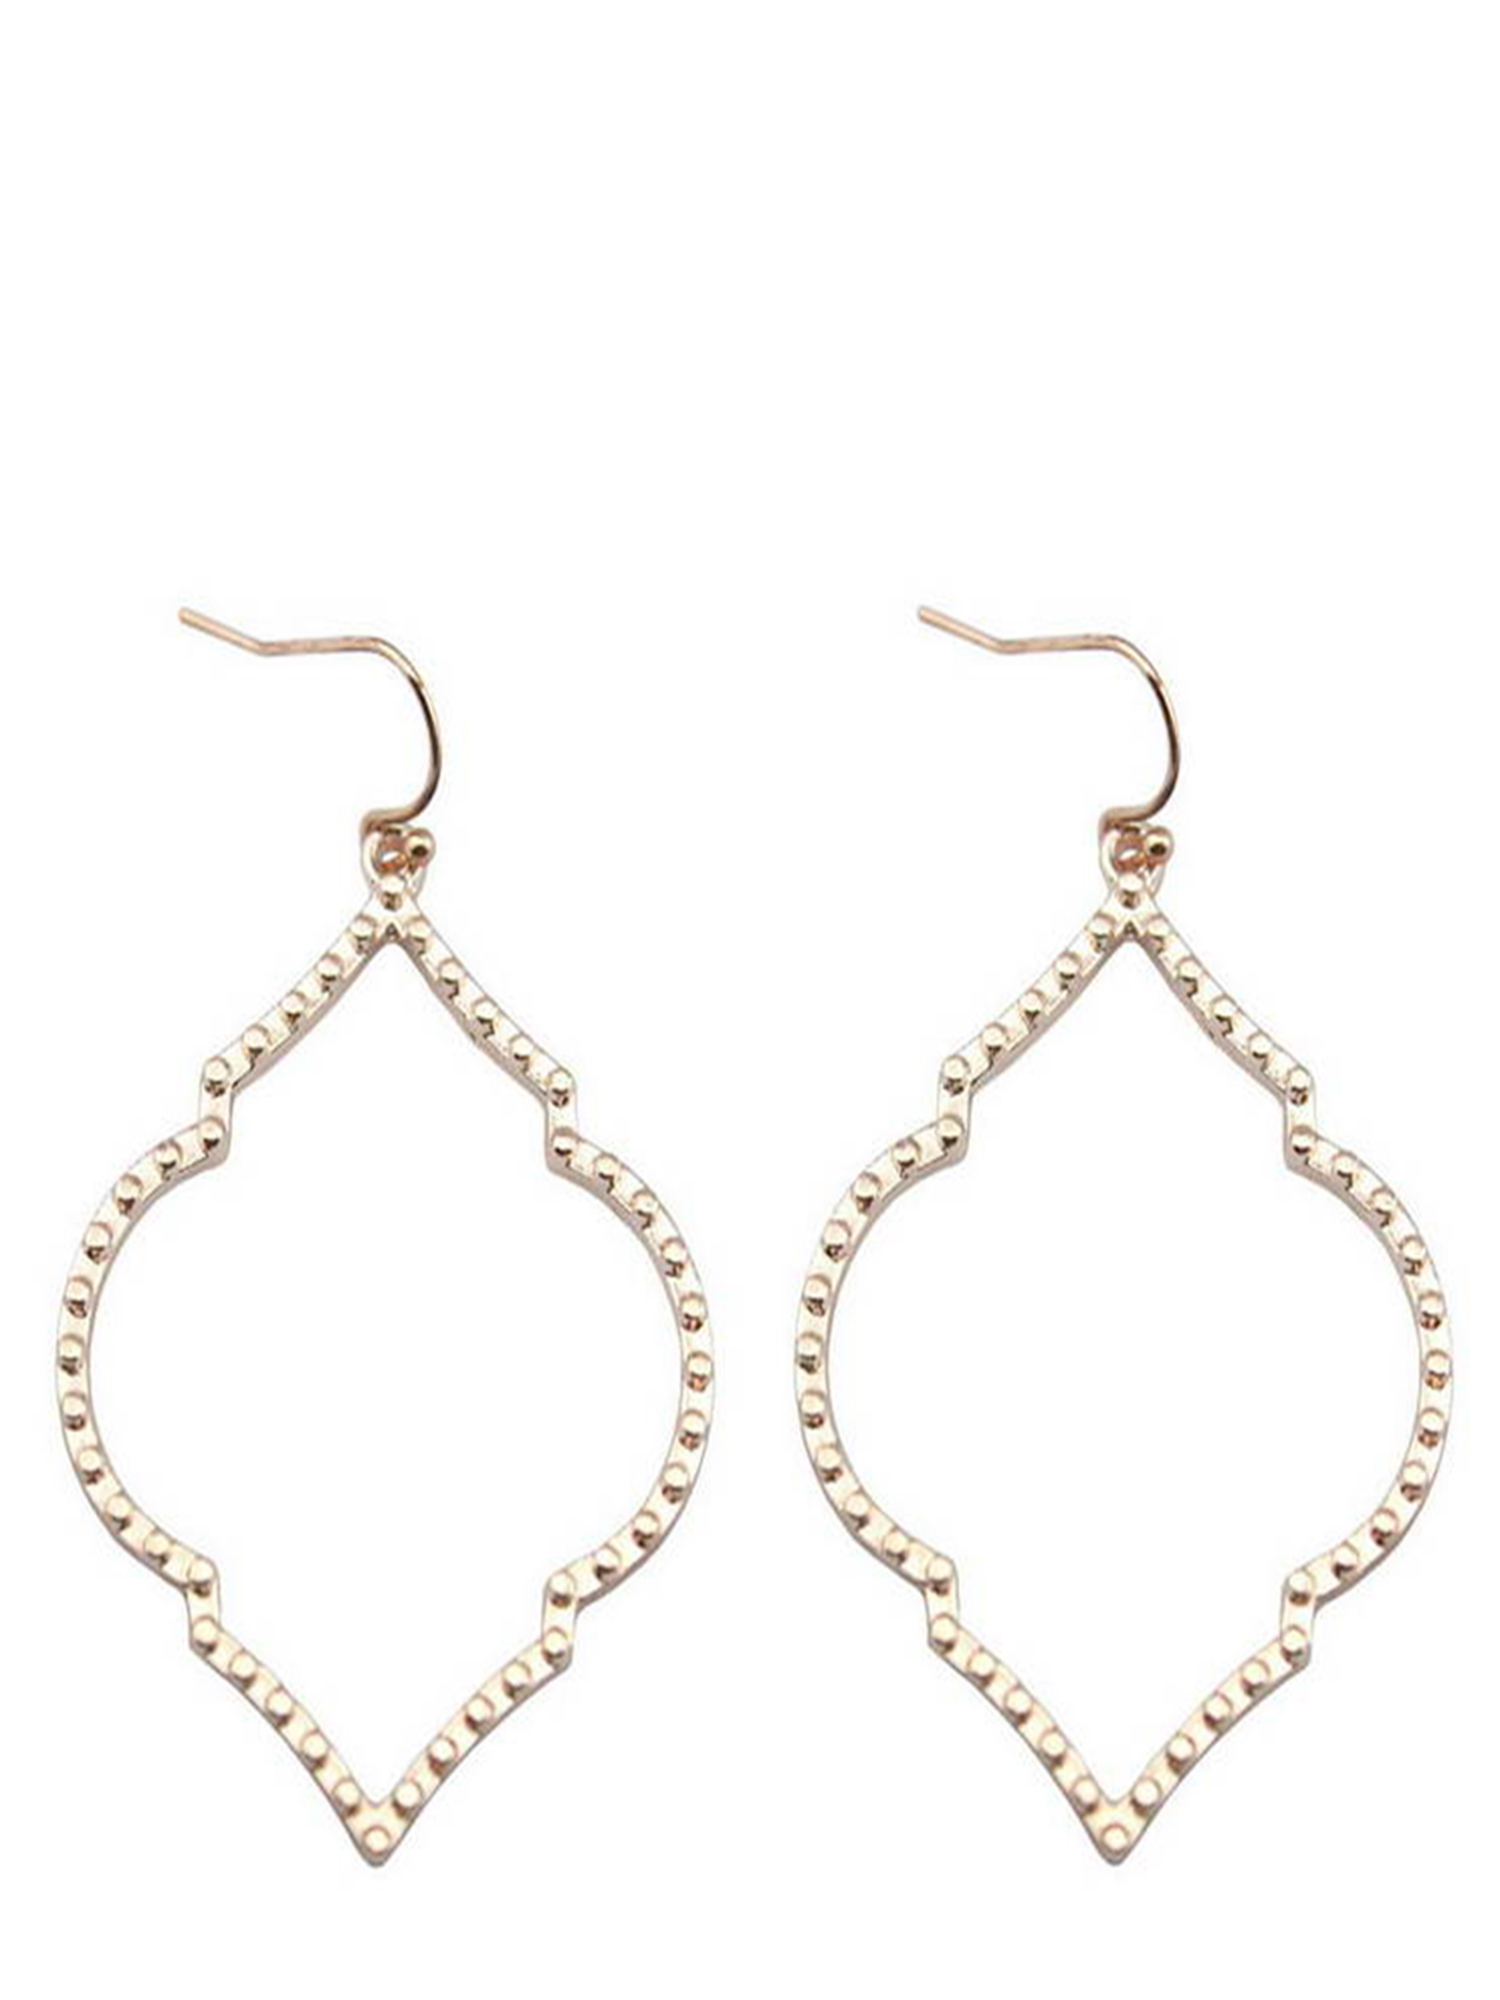 StylesILove Womens Girls Arabesque Chandelier Filigree Statement Earrings (Rose Gold) - image 1 of 1